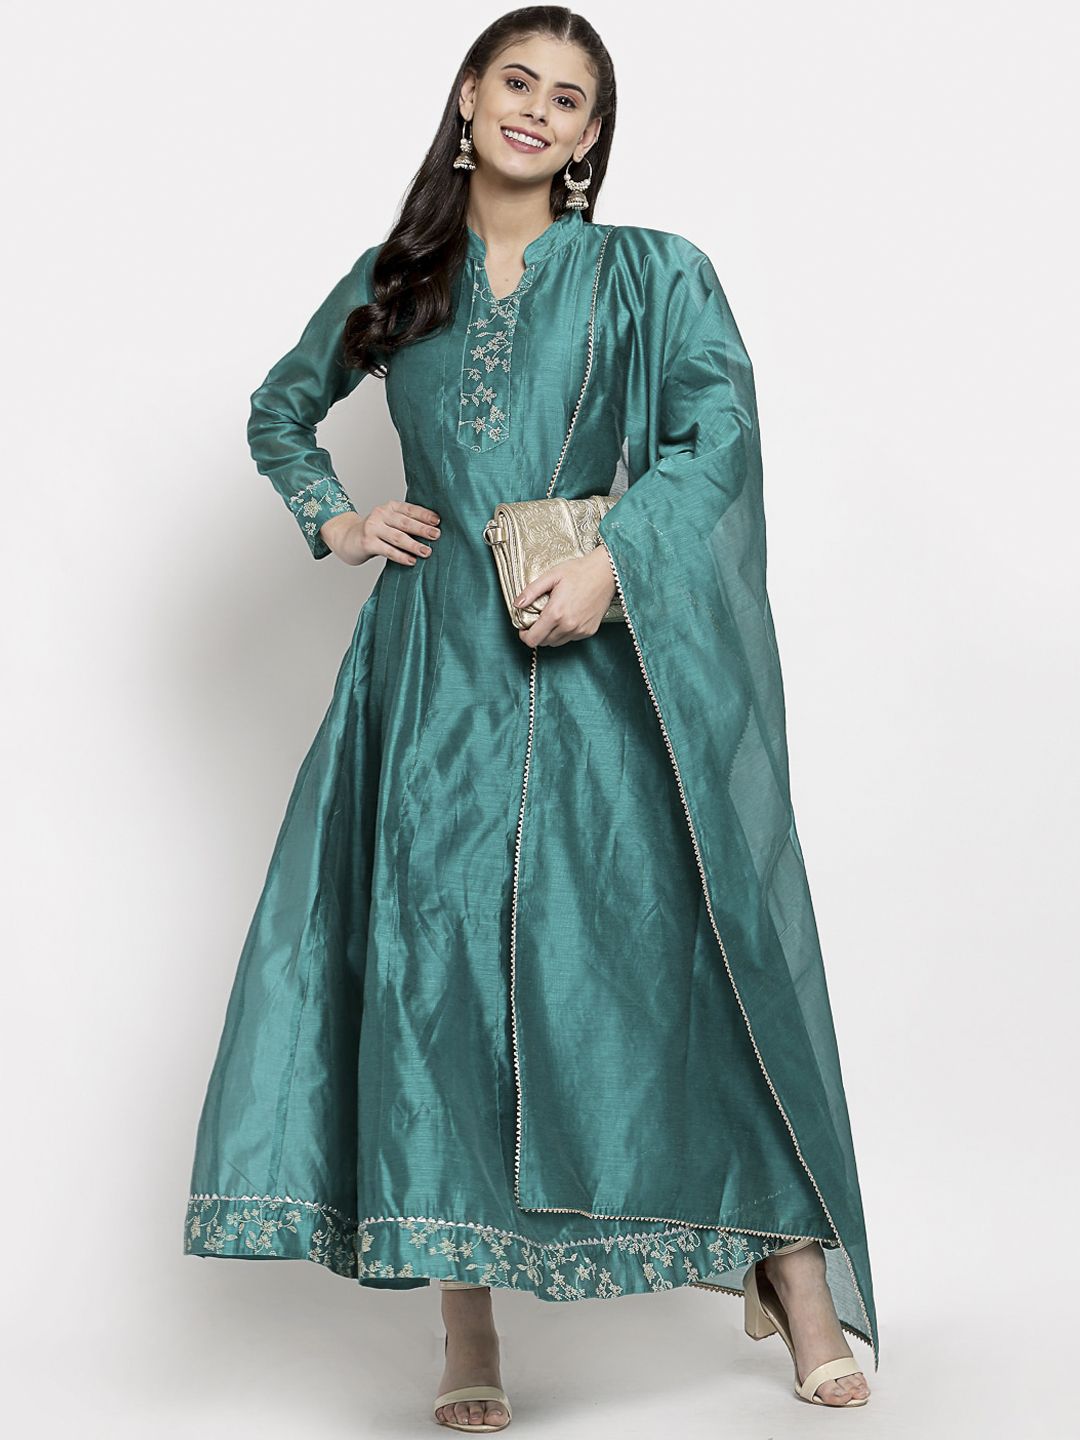 Myshka Green Ethnic Motifs Ethnic Anarkali Dress With Dupatta Price in India